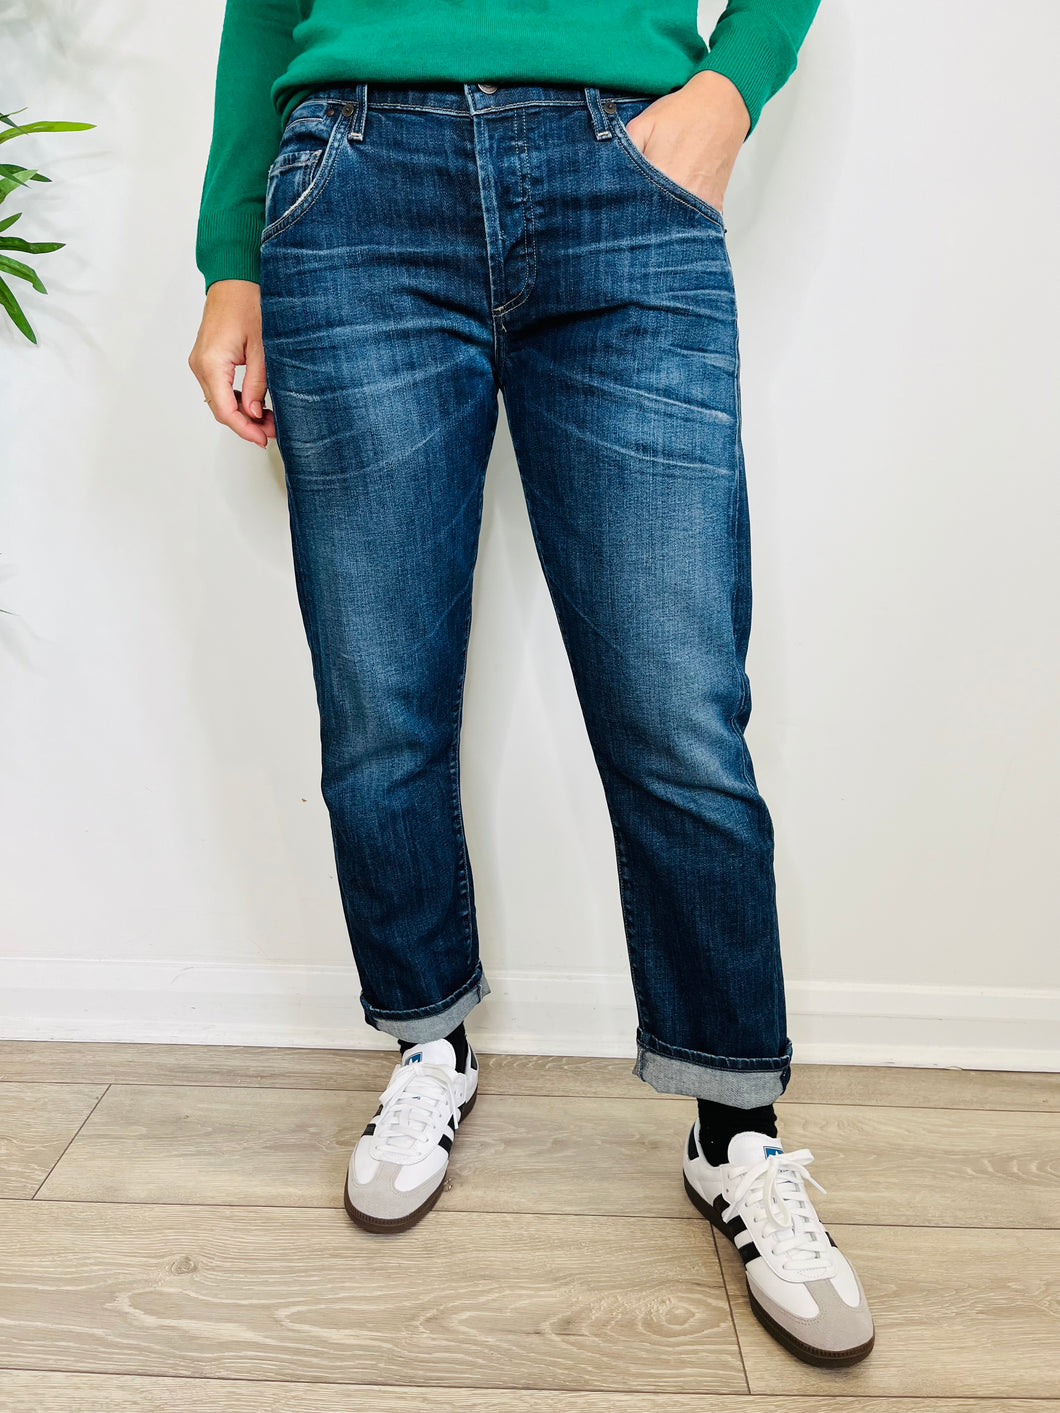 Emerson Jeans - Size 29